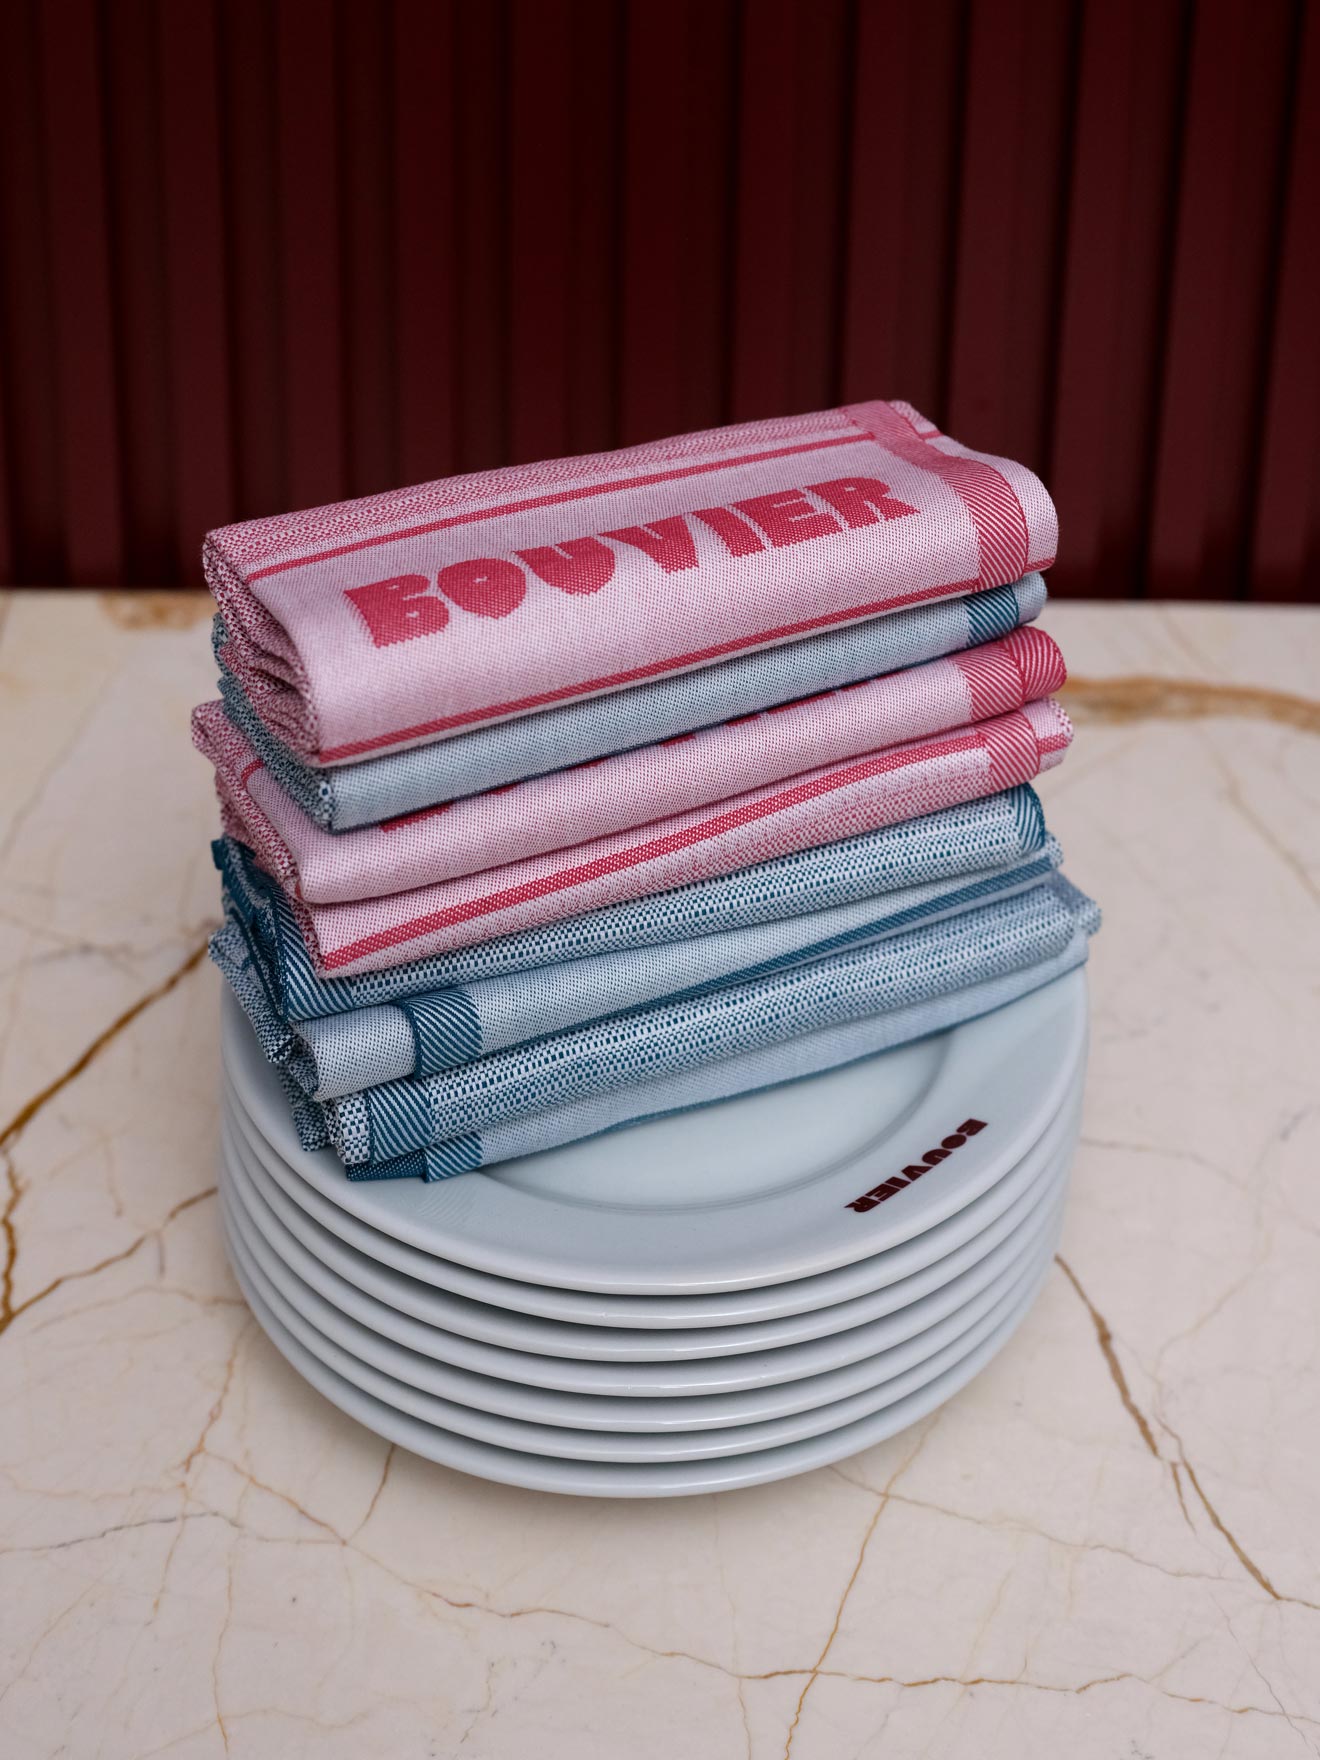 Stack of branded napkins on plates